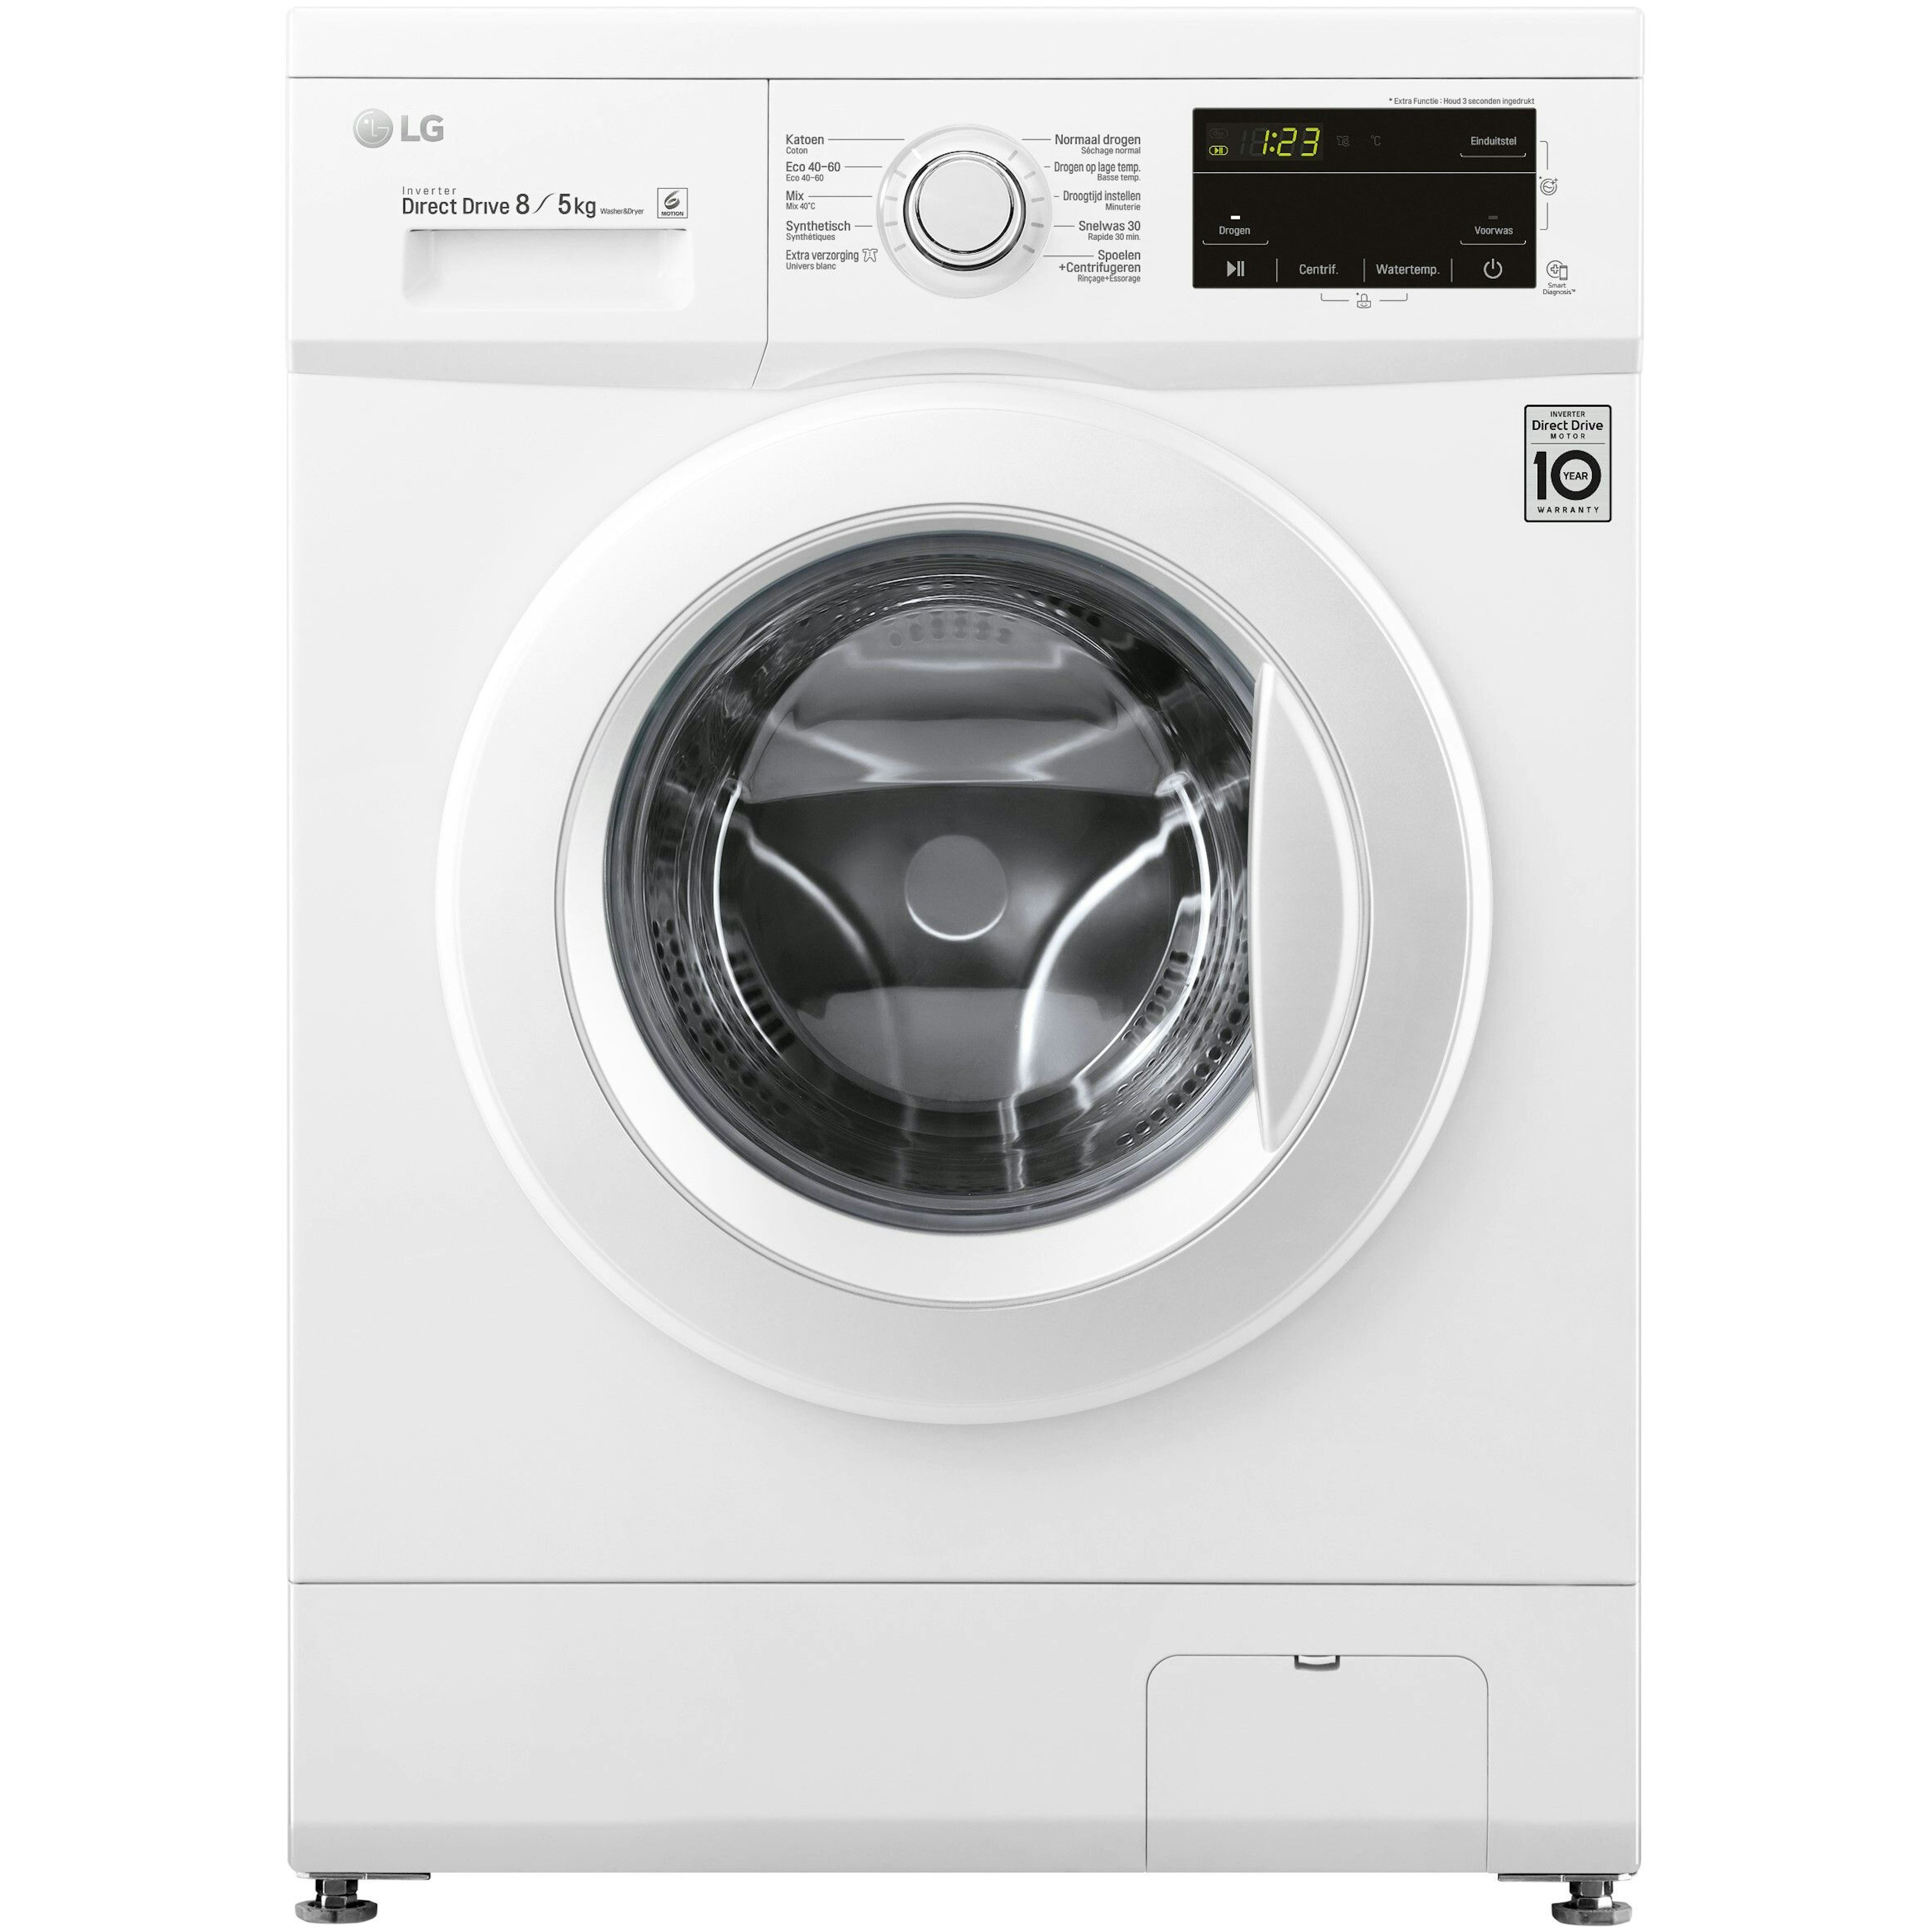 LG GD3M108N3 wasmachine afbeelding 1